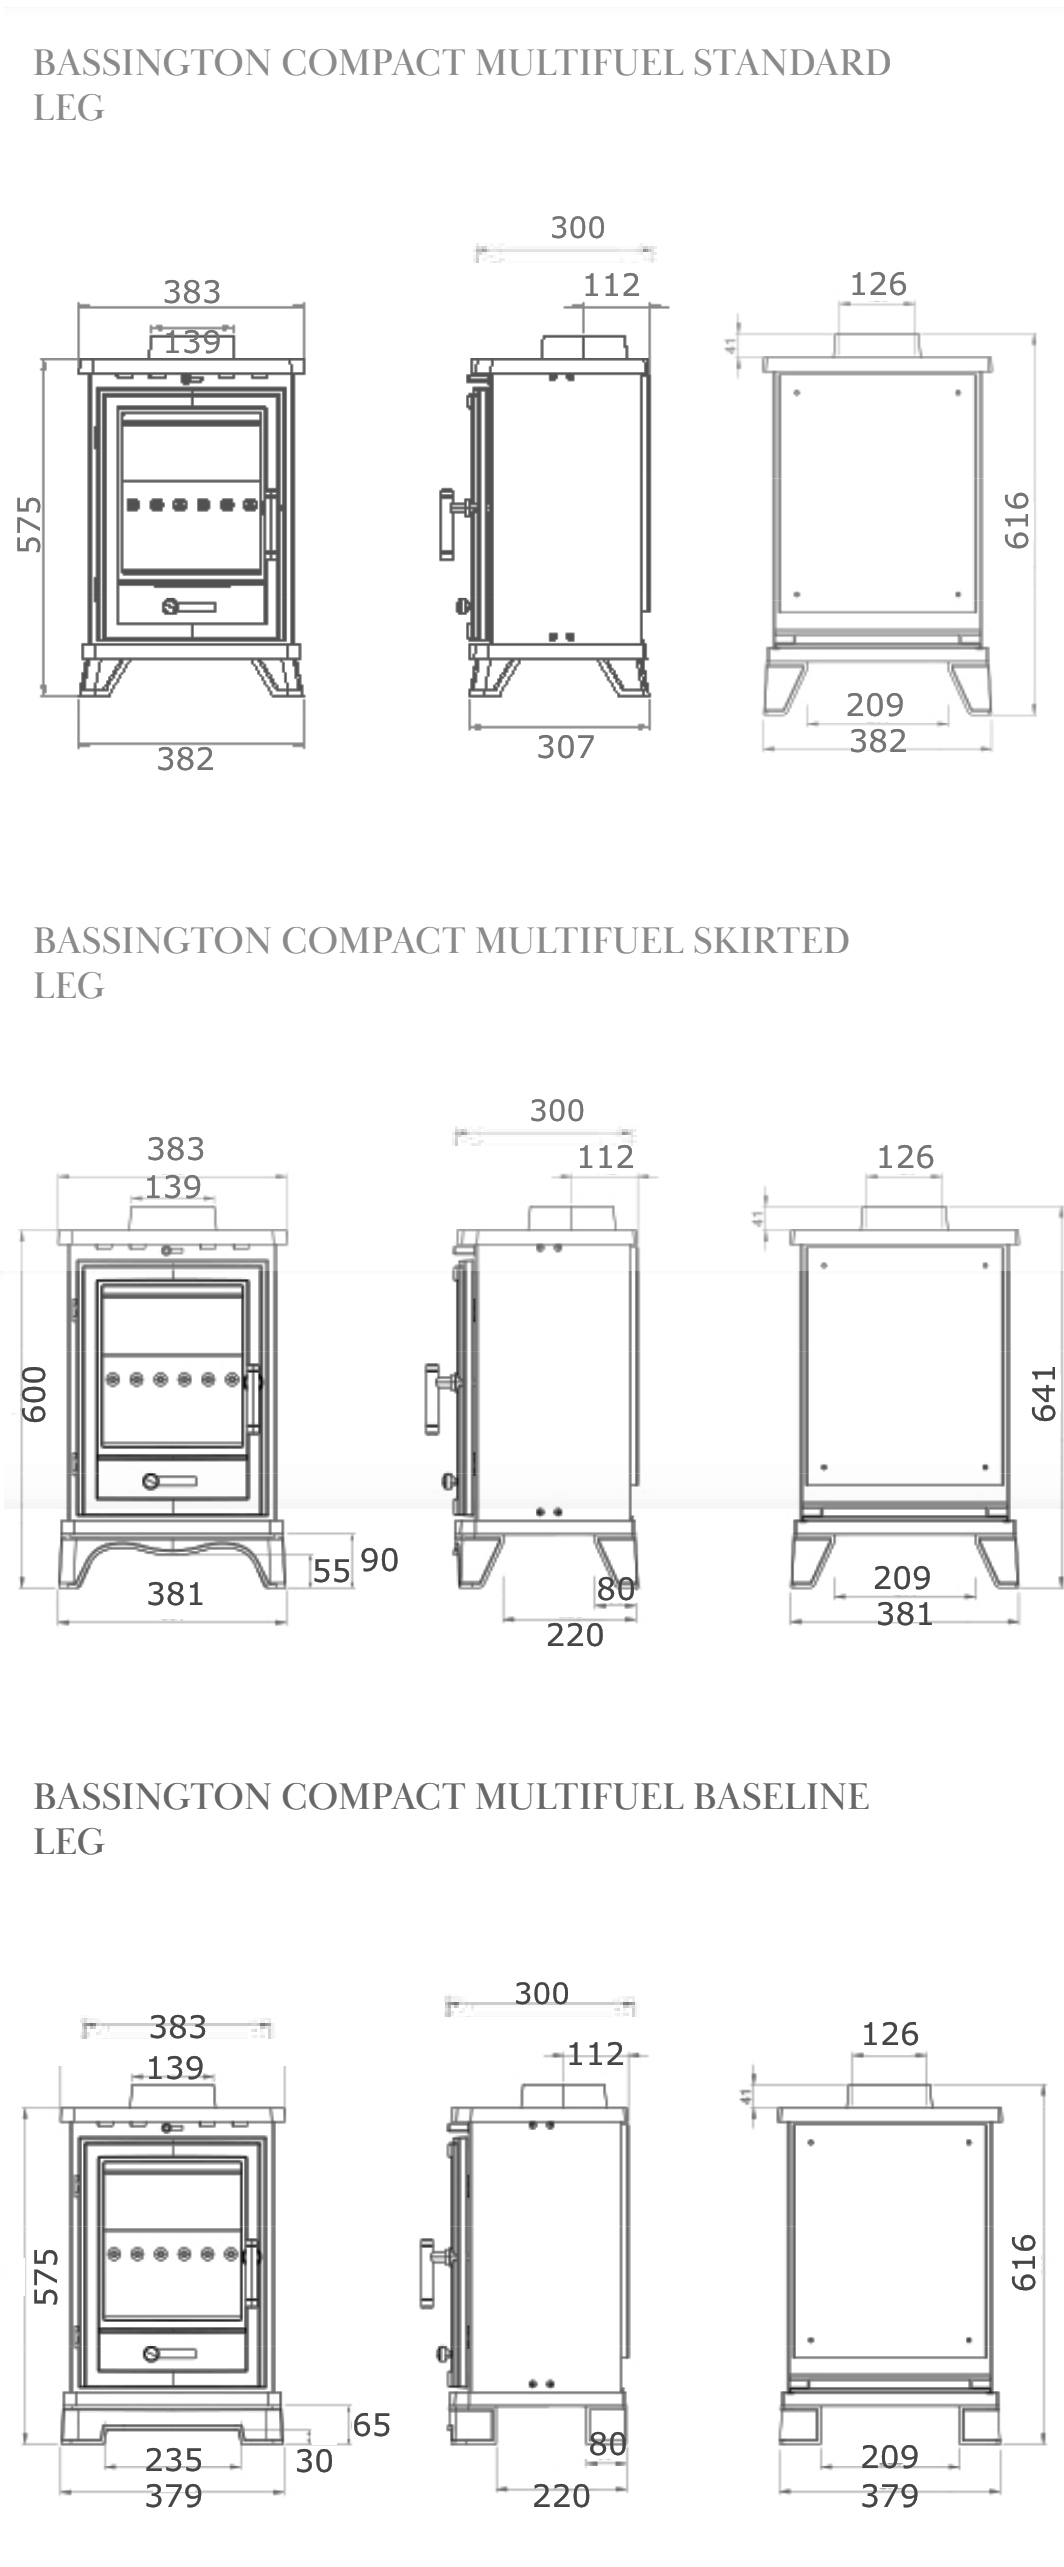 Penman Bassington Compact Multifuel Sizes